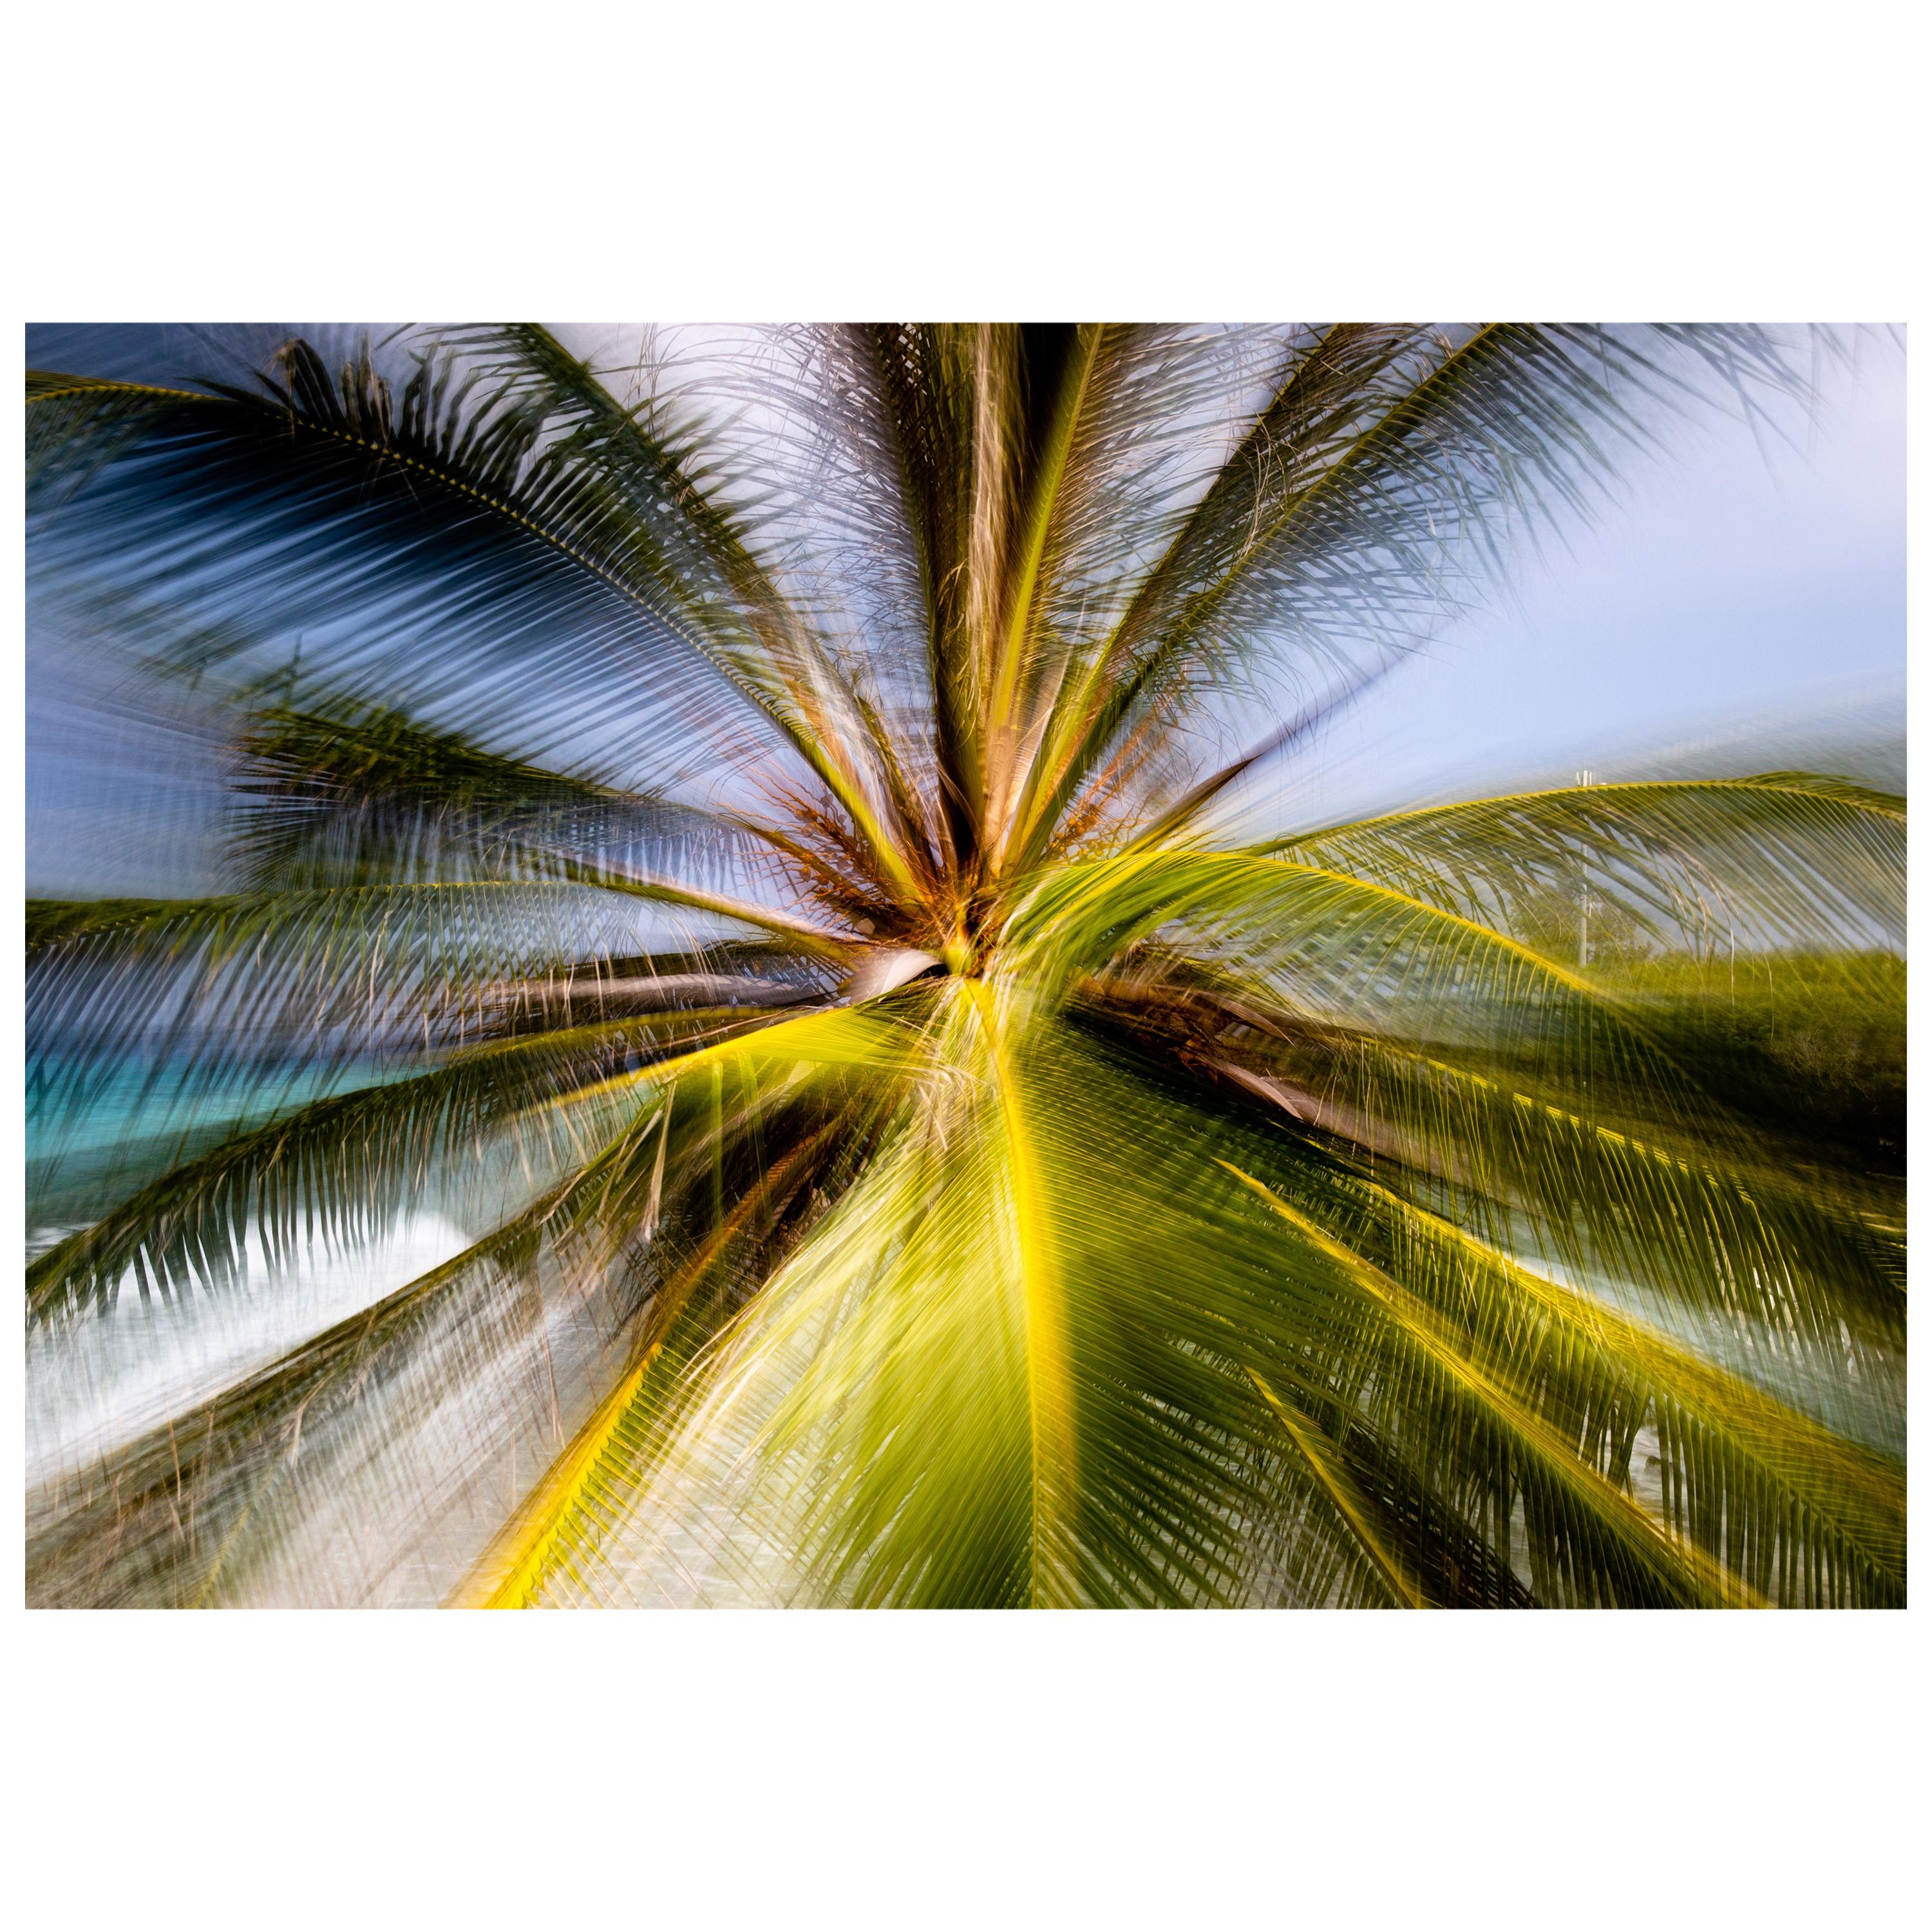 “Tropical” Photography, 2019 by Brazilian Photographer Chico Kfouri